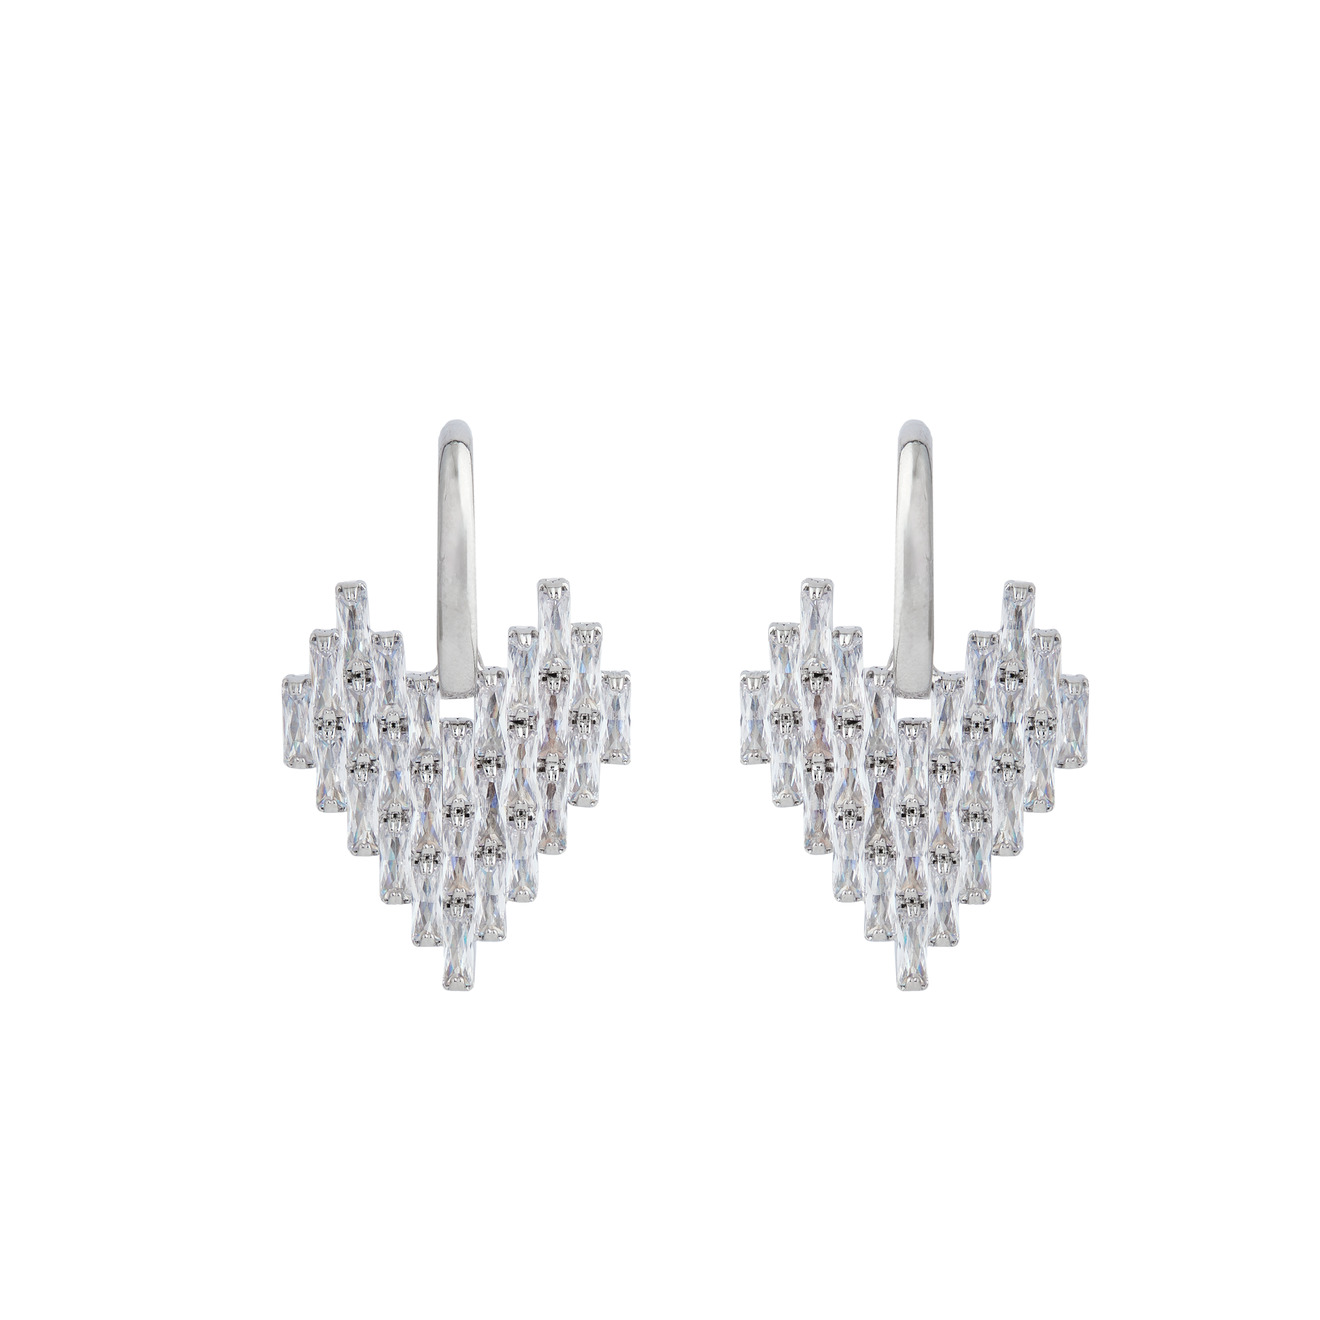 Herald Percy Серебристые серьги-сердца с багетами кристаллов herald percy серебристые серьги хупы с форме сердца